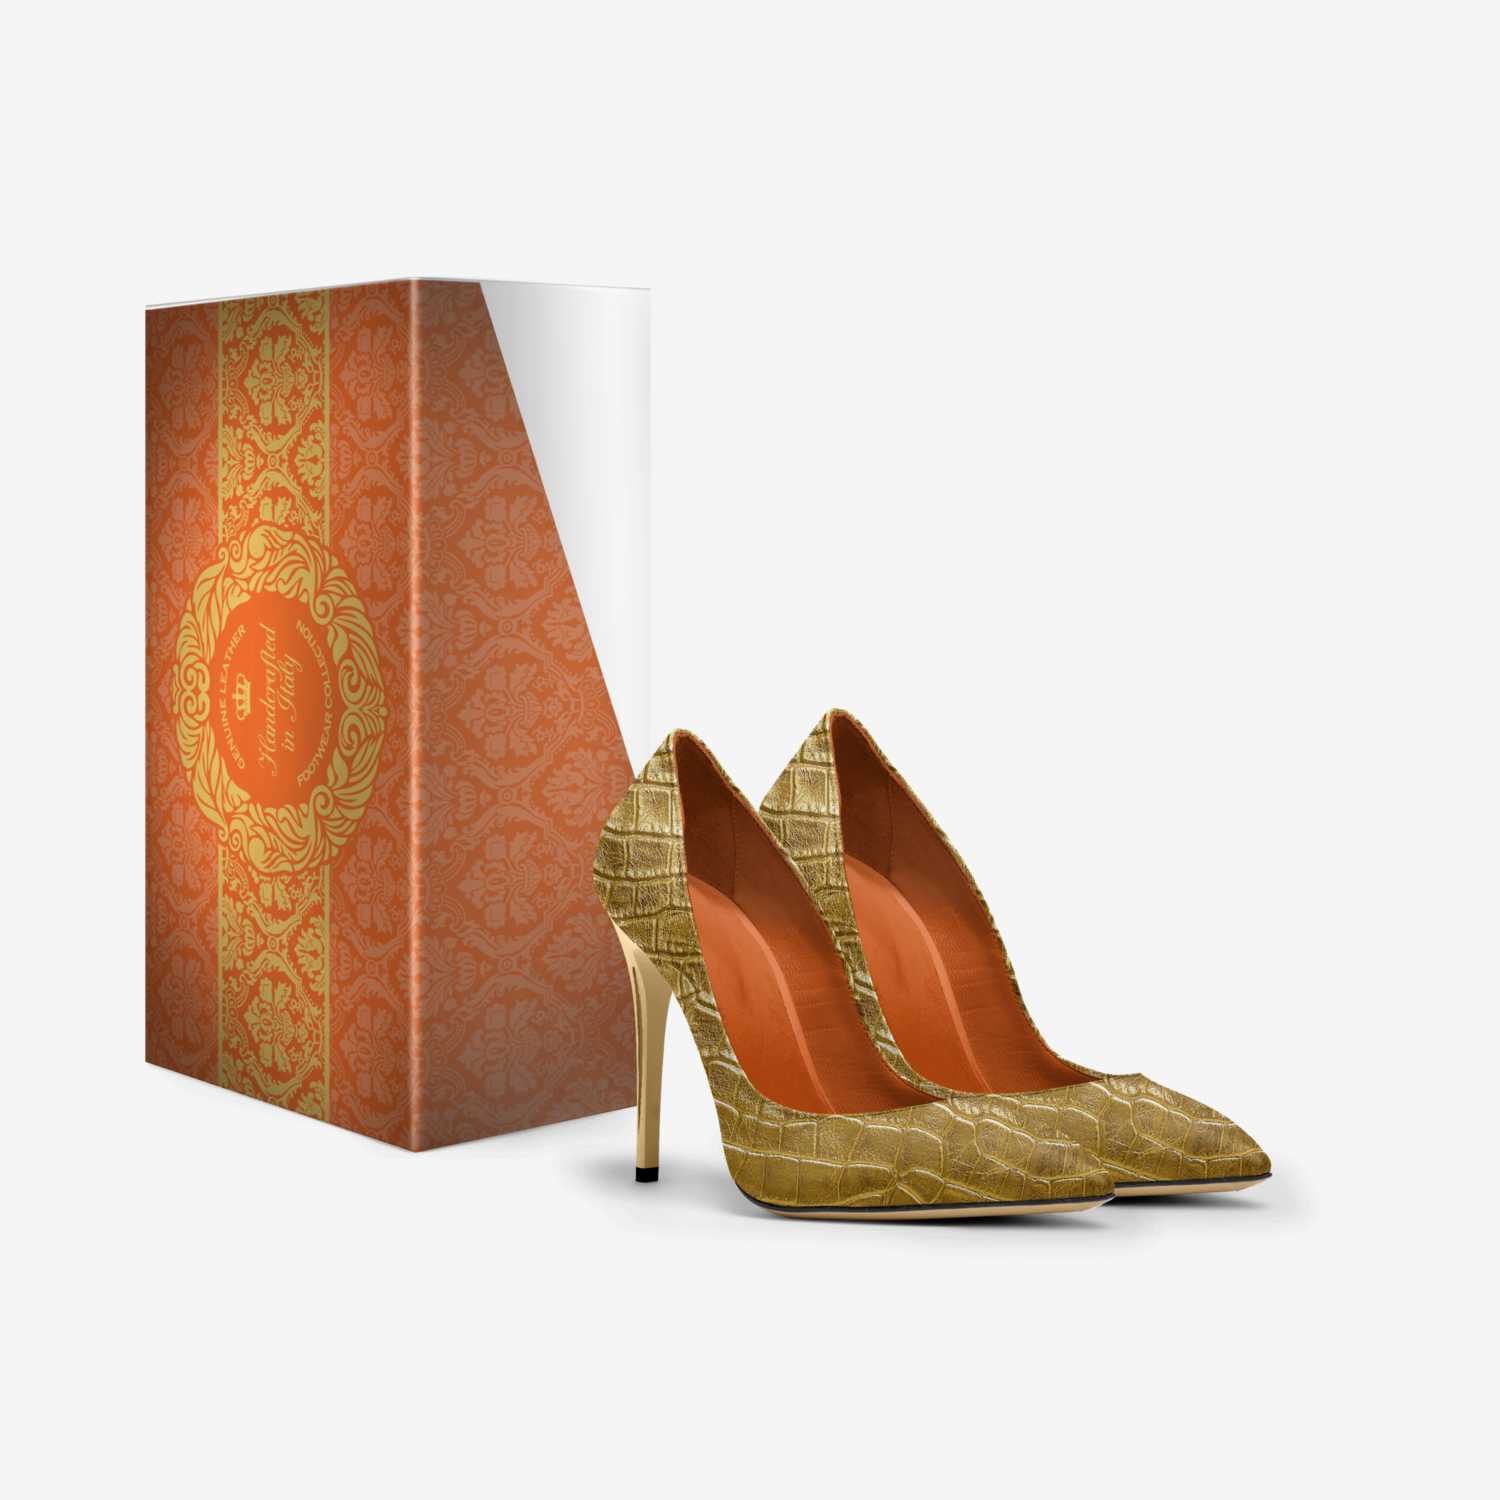 Diamond Steps custom made in Italy shoes by Sophia Mari | Box view